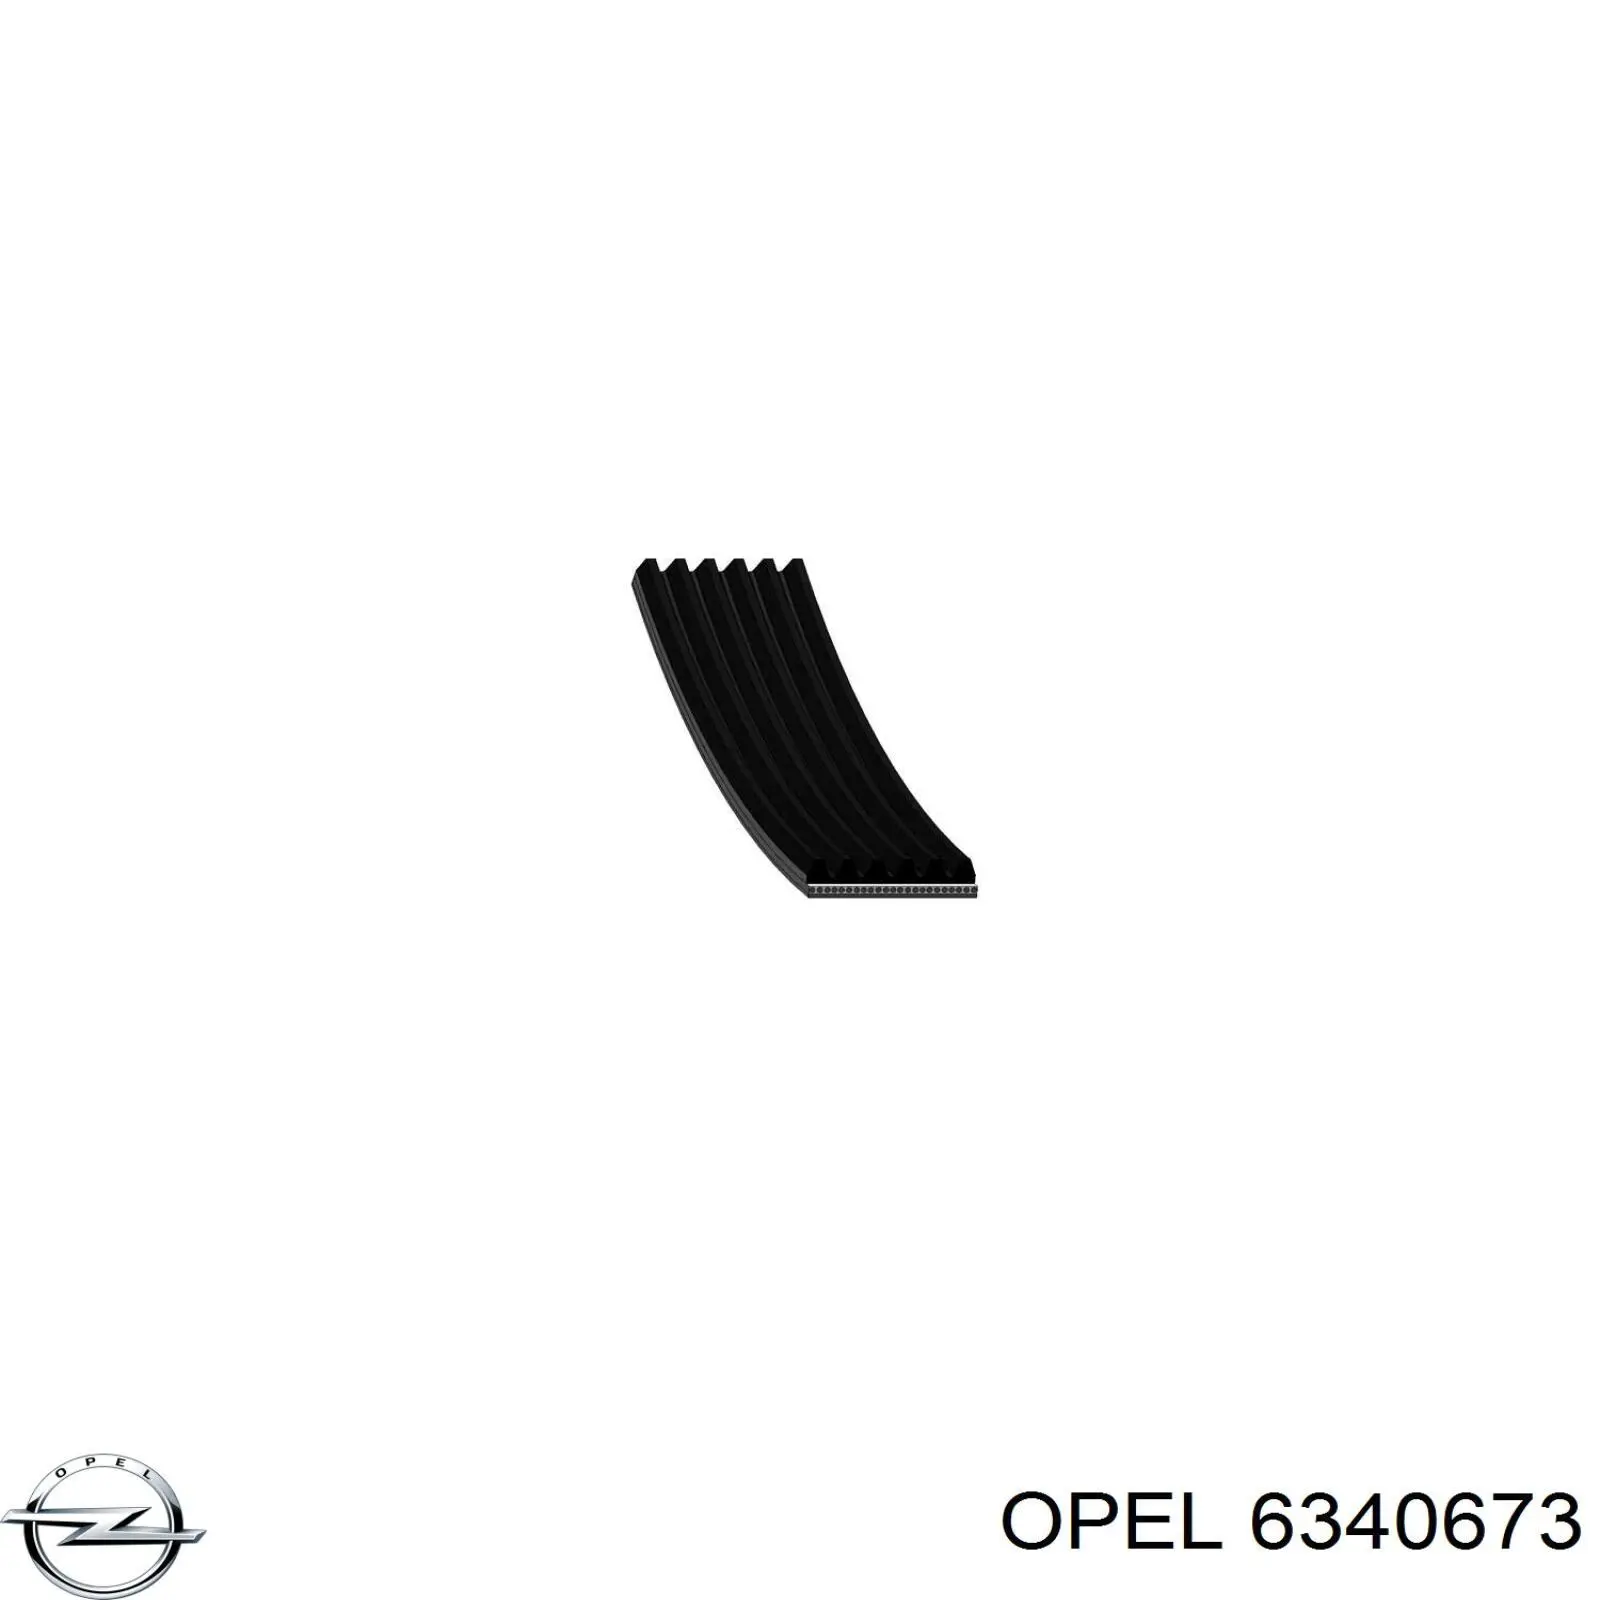 6340673 Opel correa trapezoidal